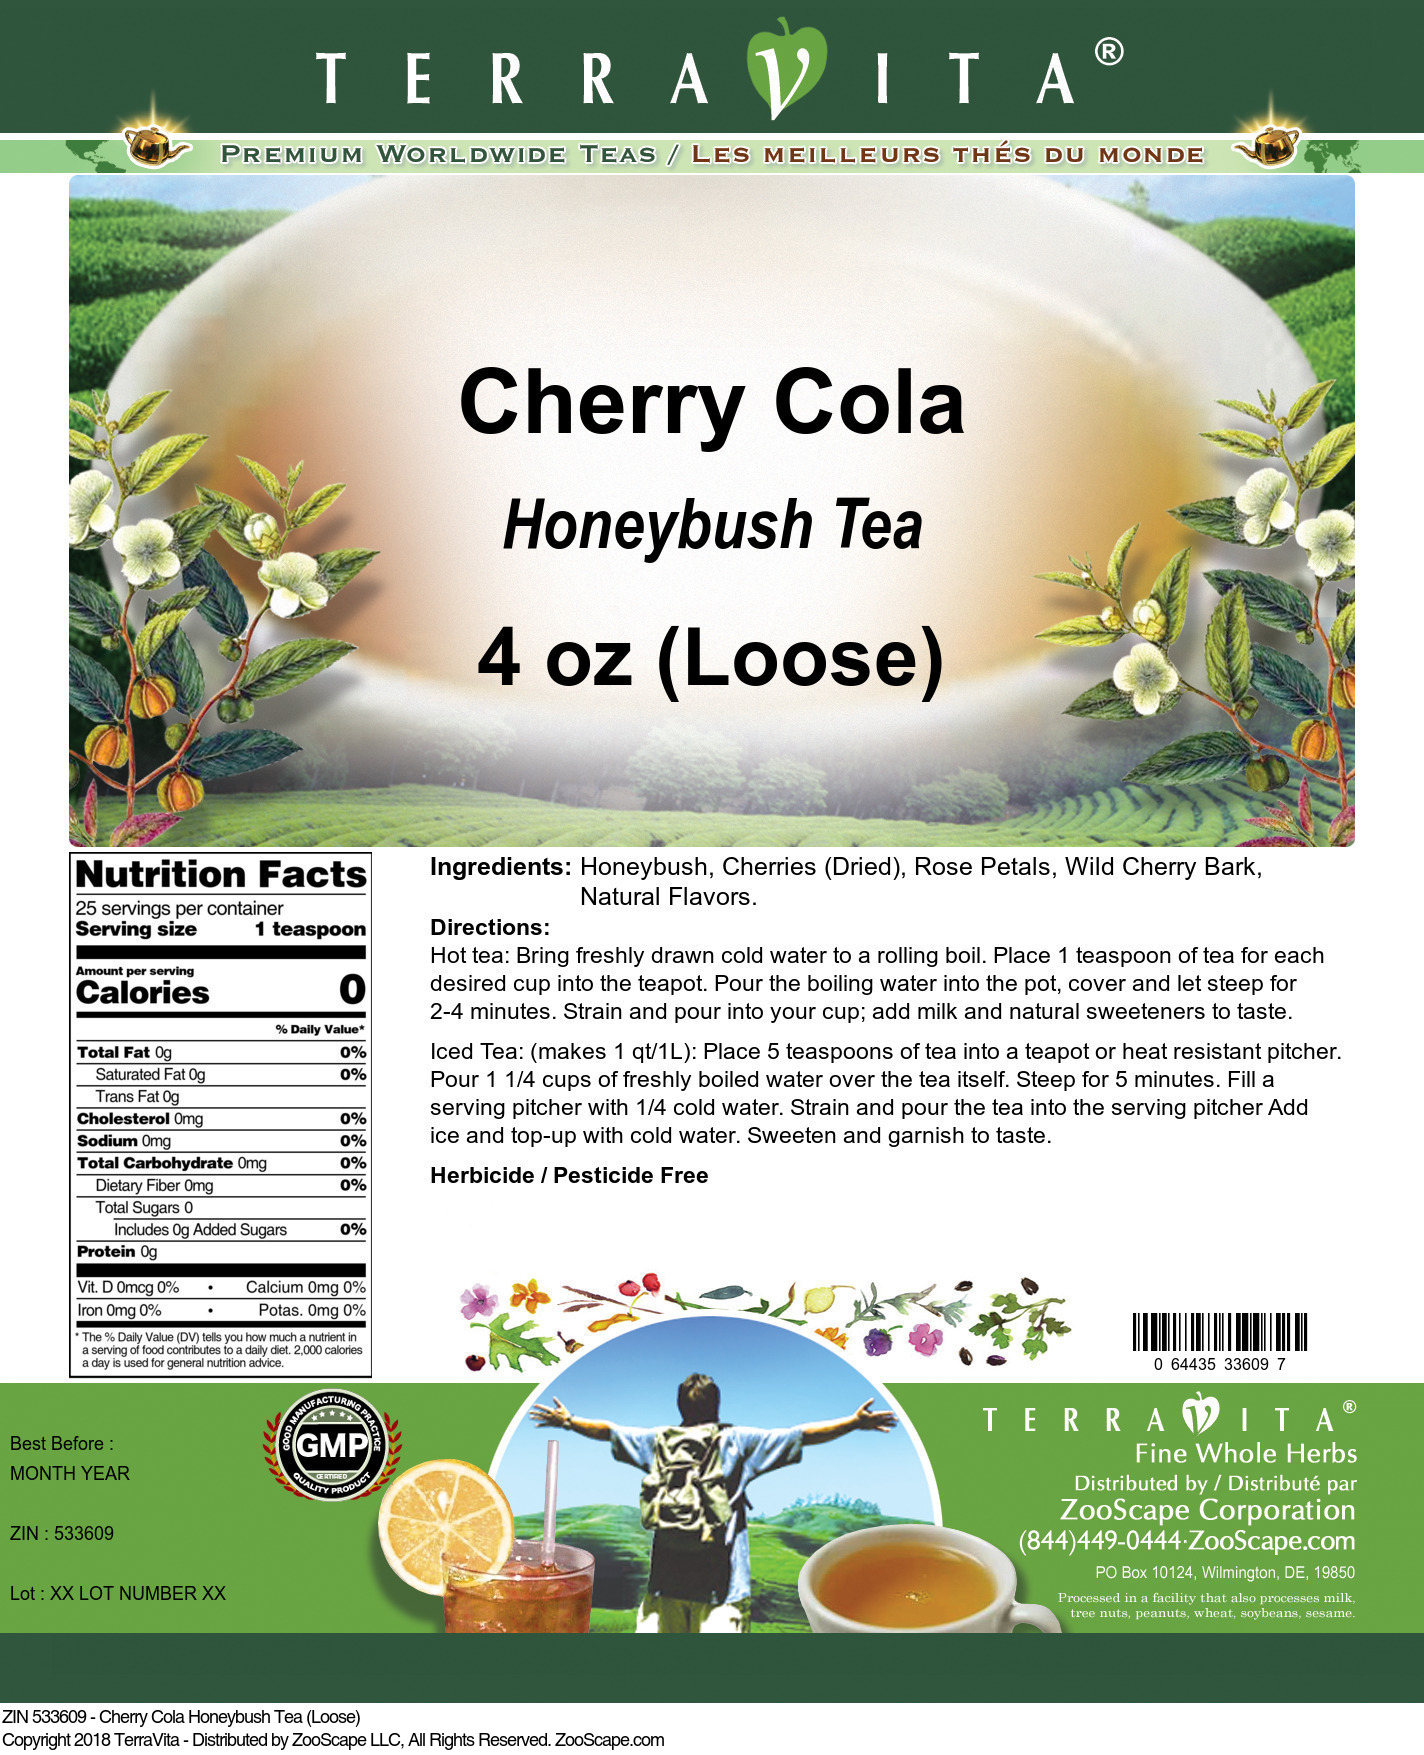 Cherry Cola Honeybush Tea (Loose) - Label